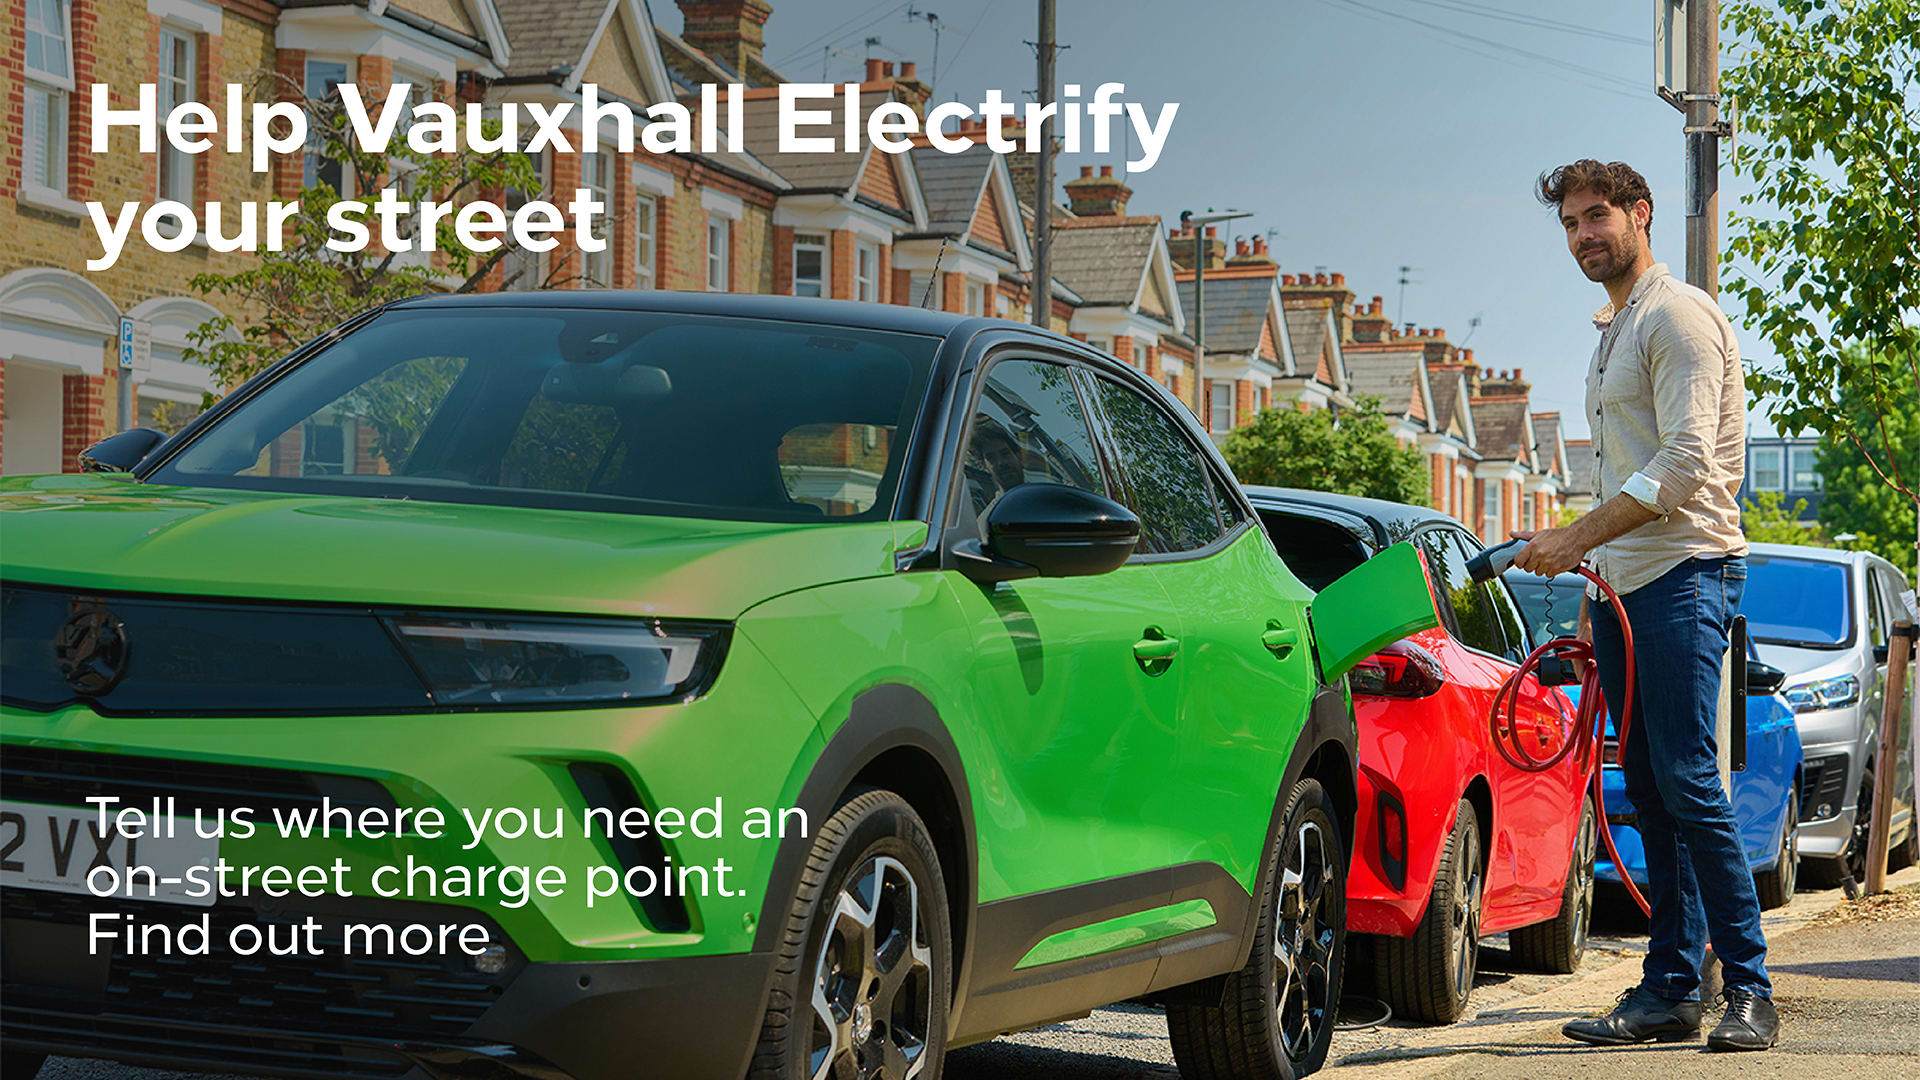 Vauxhall Electrify Britain